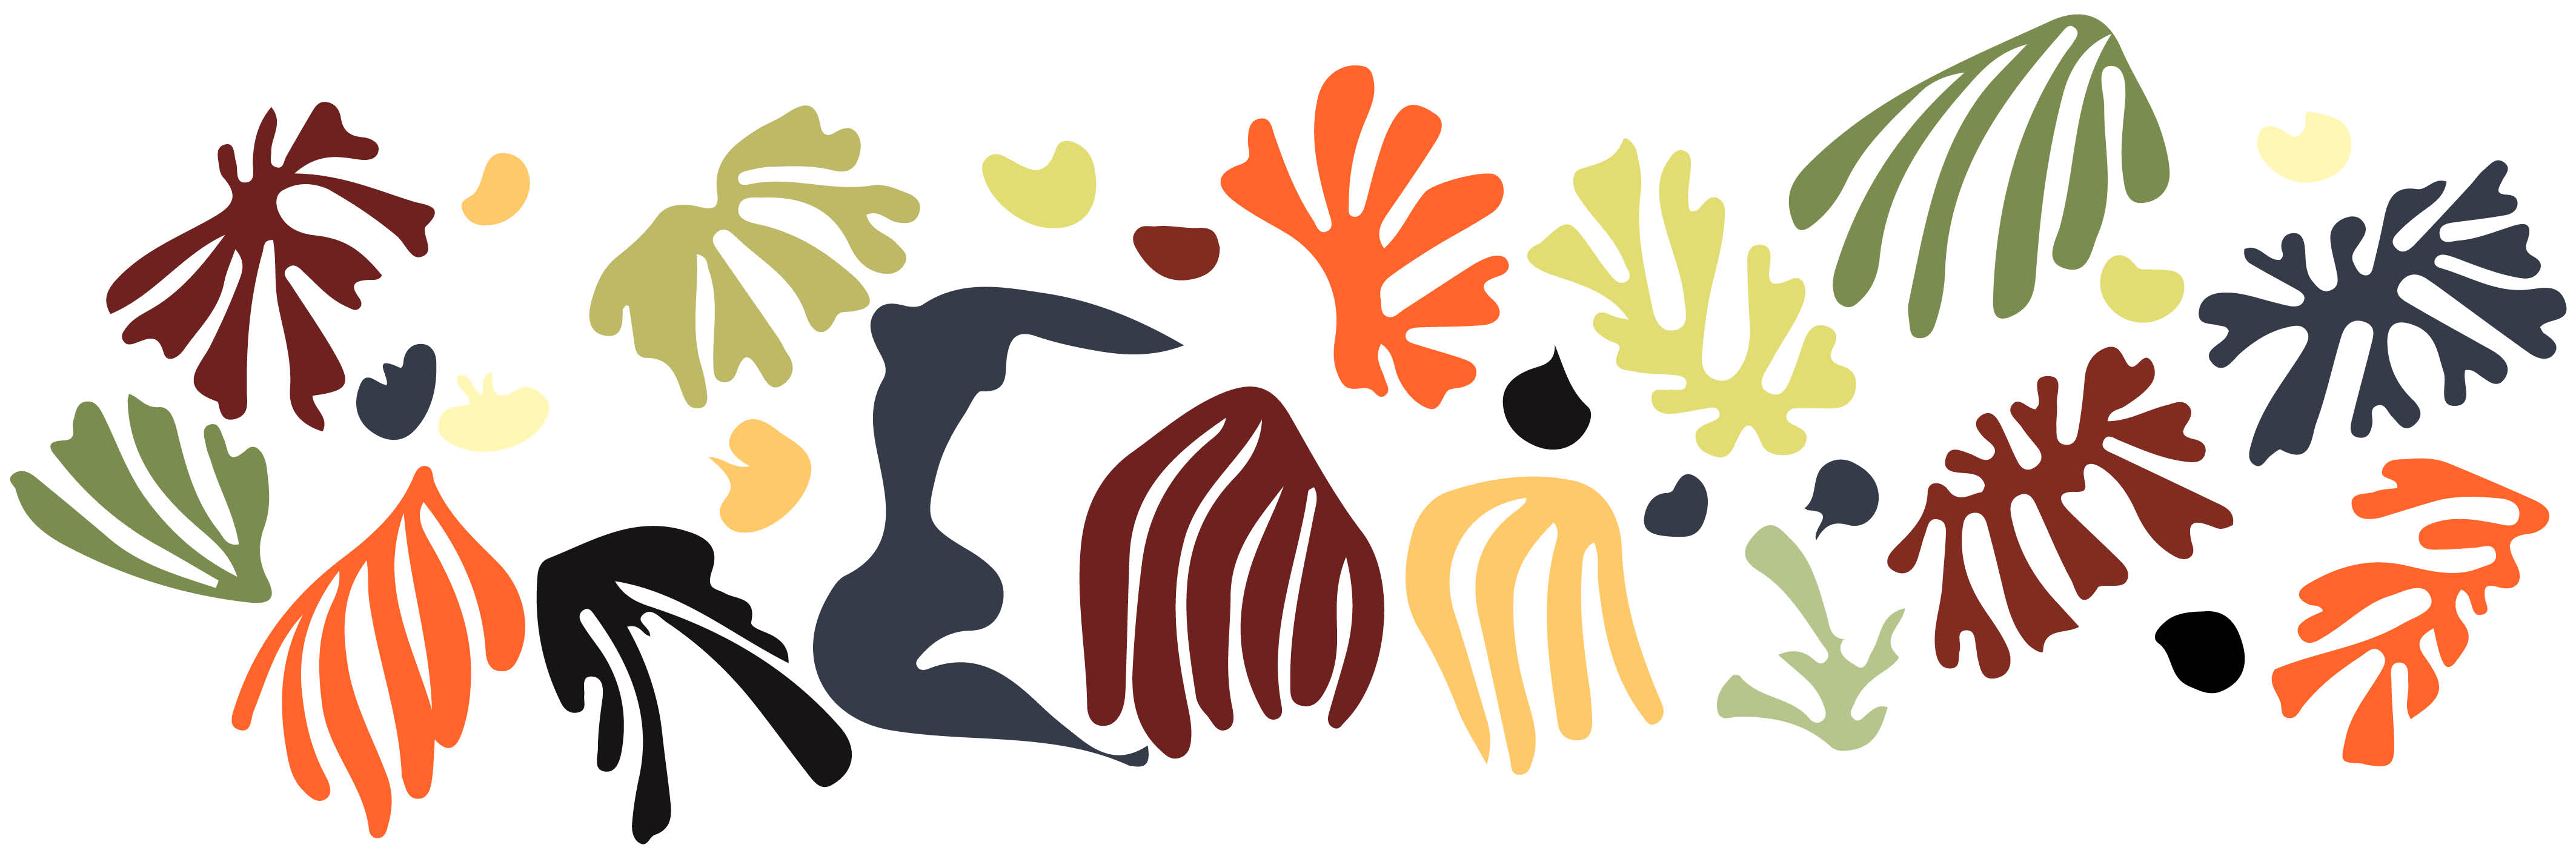 Mylands Matisse Inspired Pattern